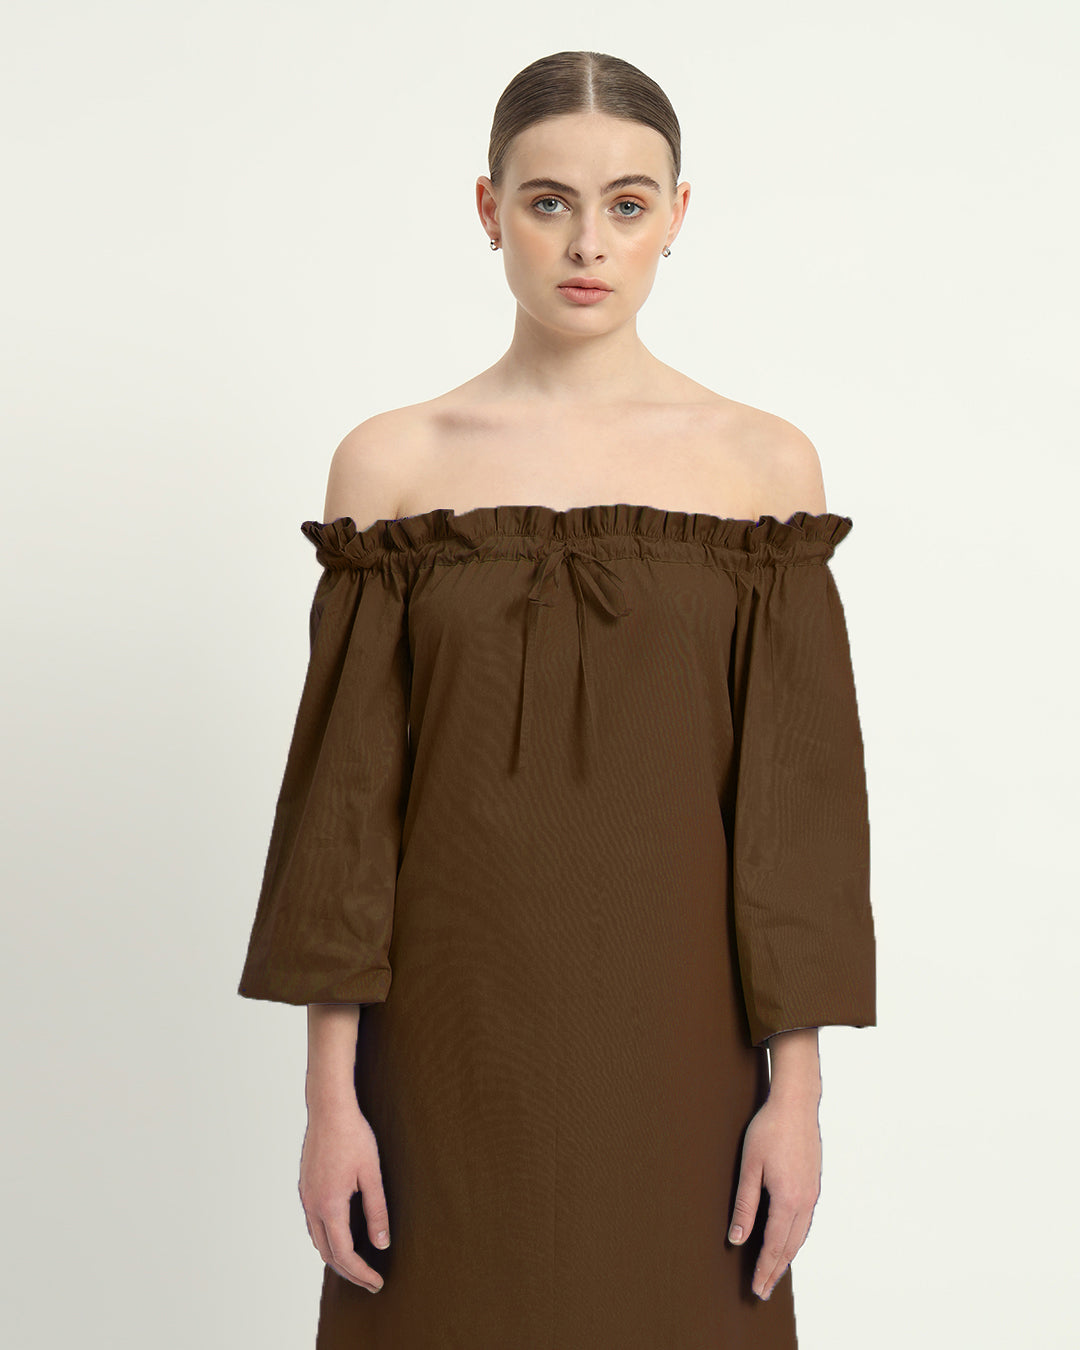 The Nutshell Carlisle Cotton Dress